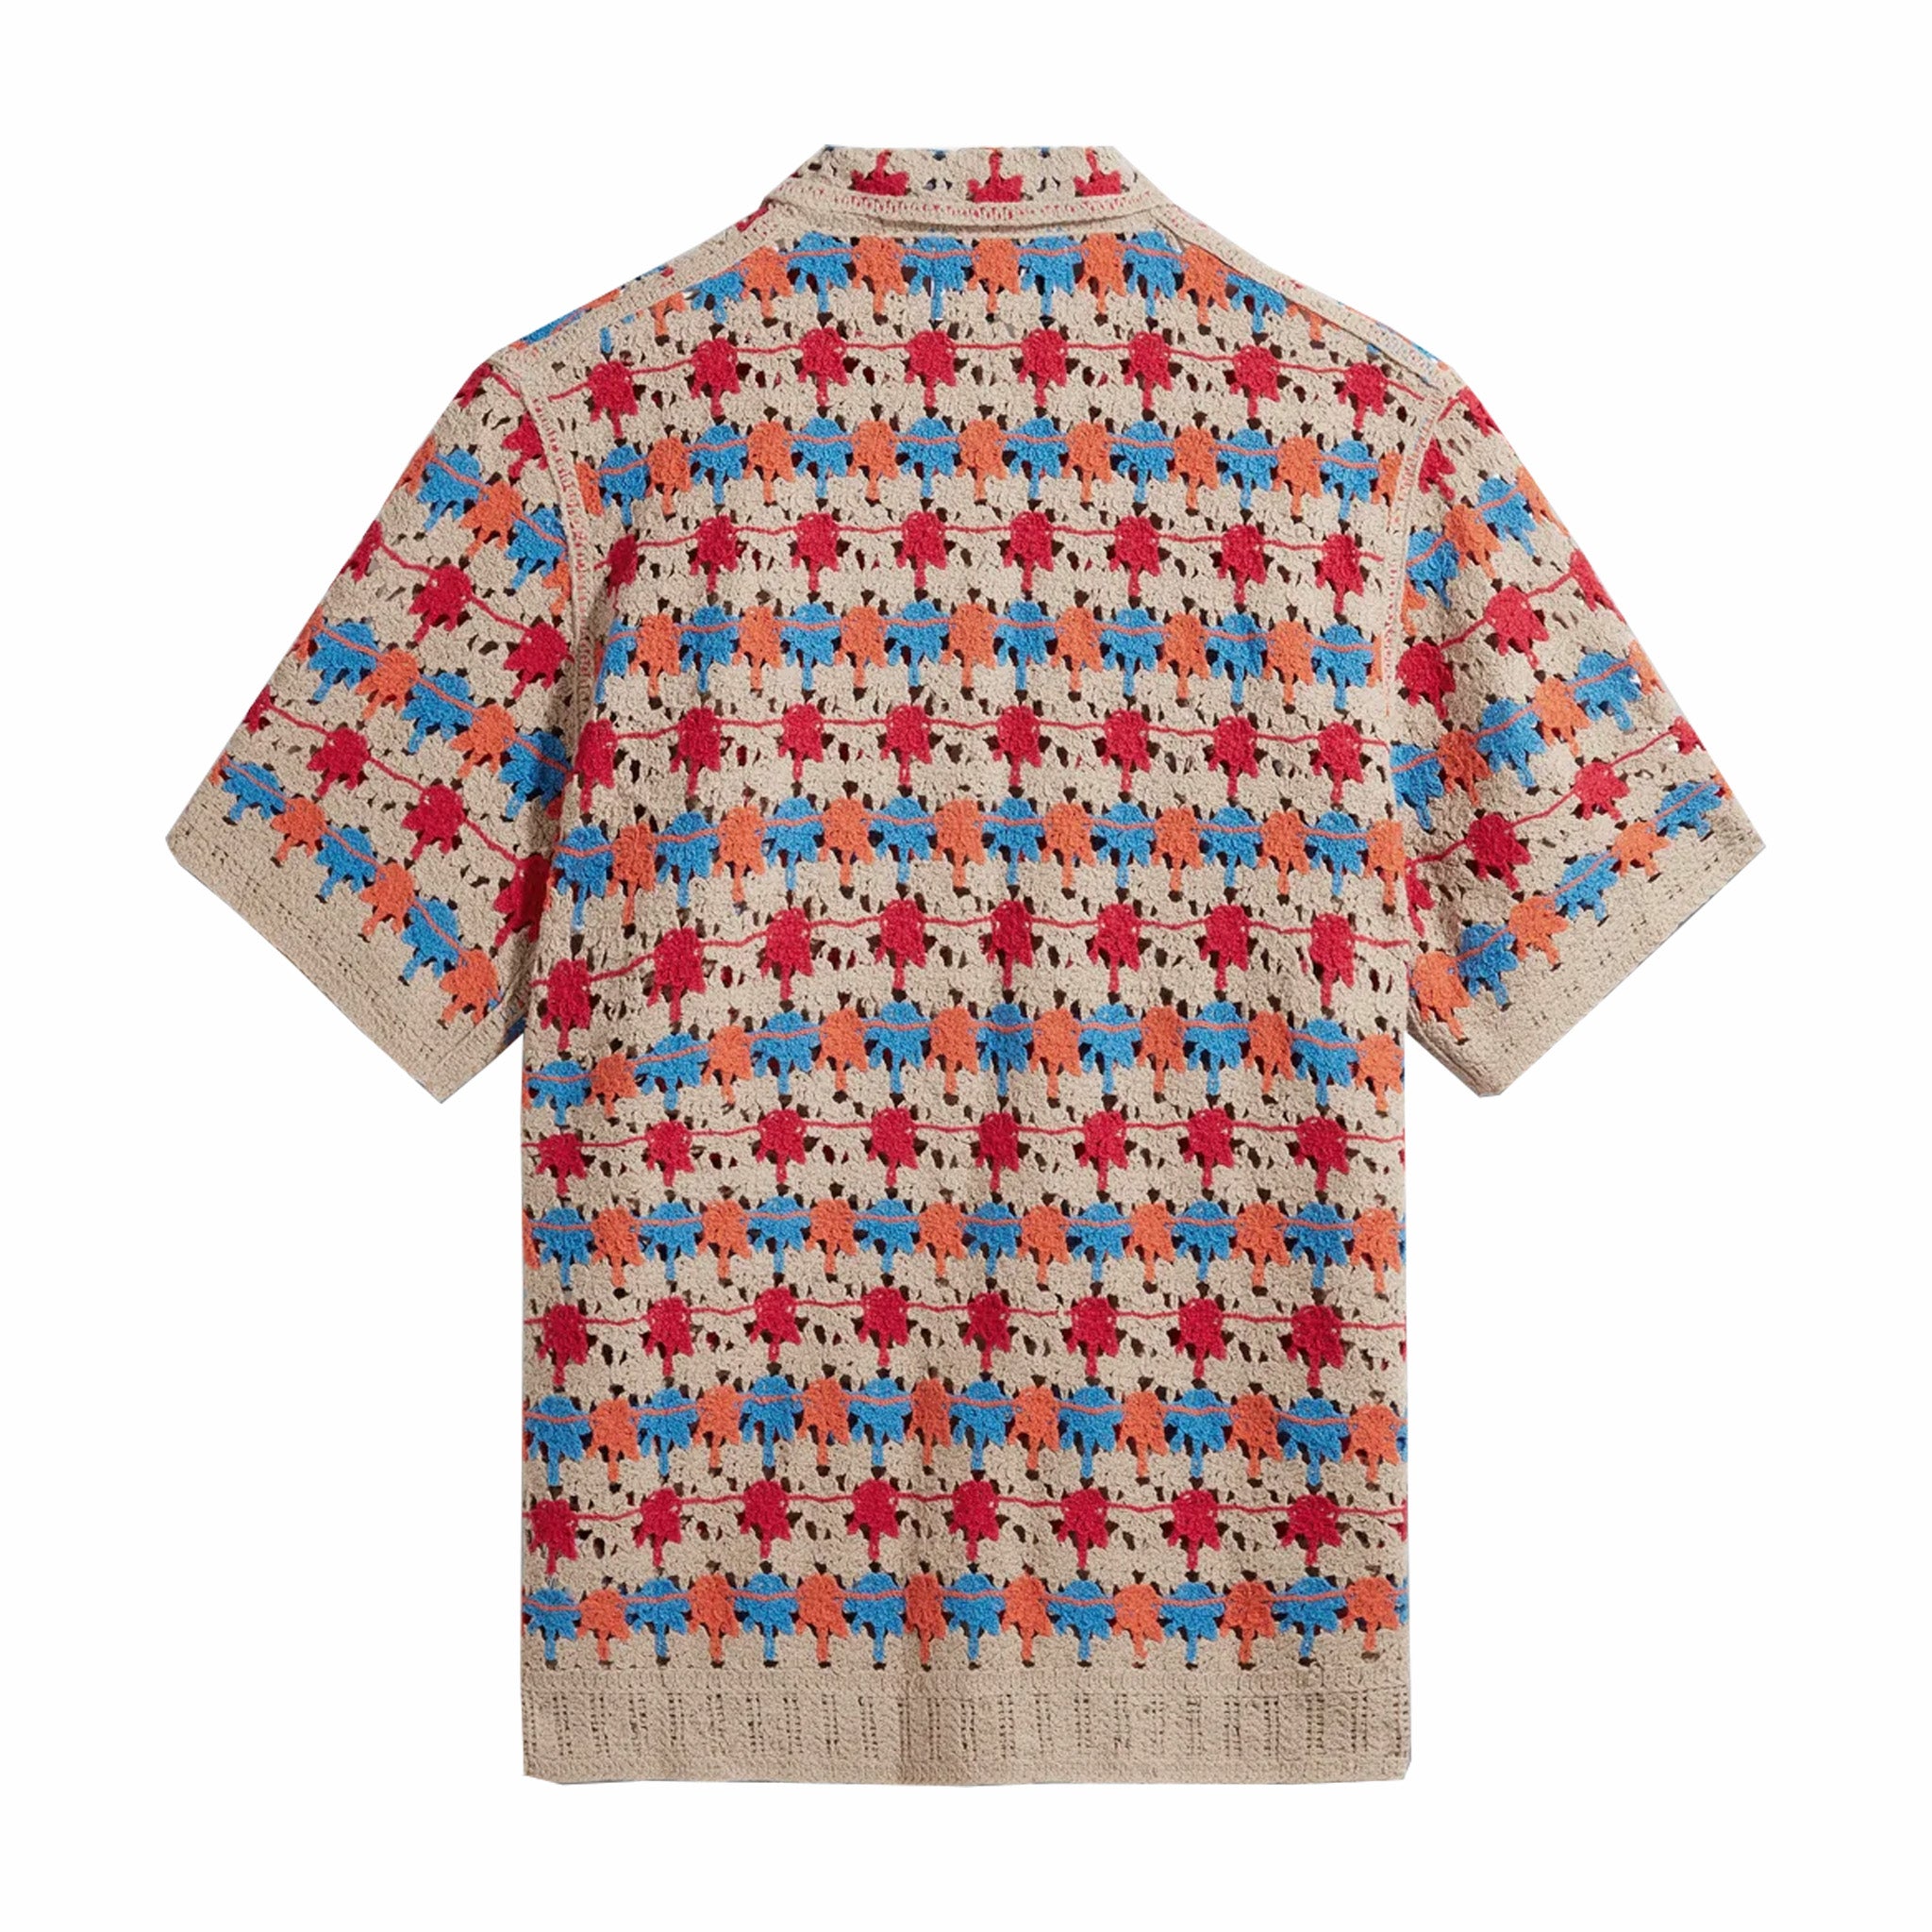 Wax London Porto Shirt - Splash Crochet (Multi) - August Shop